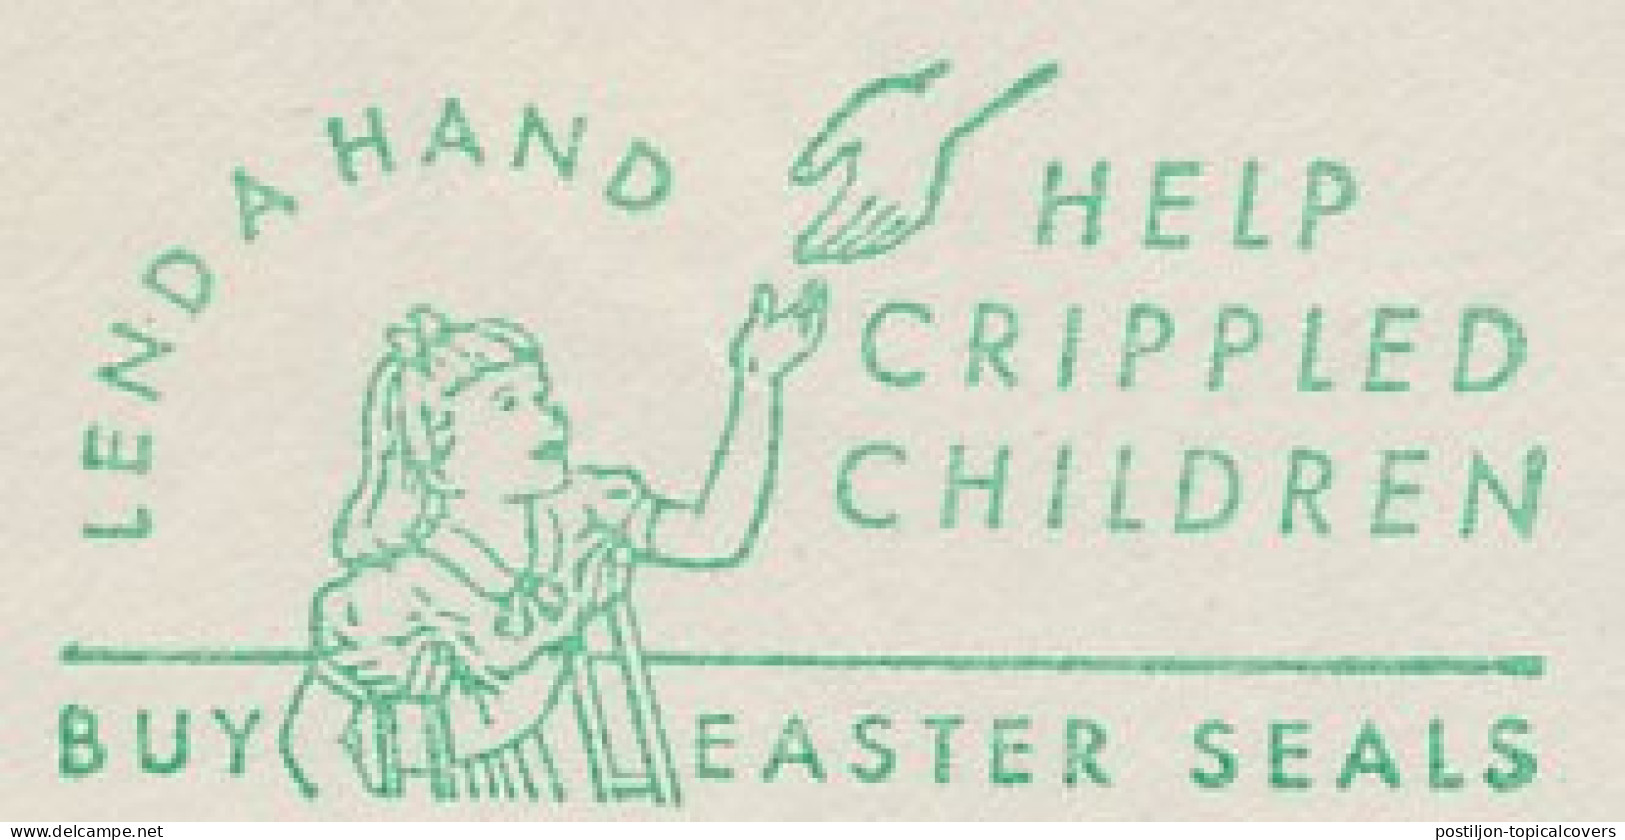 Meter Cut USA 1952 Crippled Childeren - Easter Seals - Handicaps